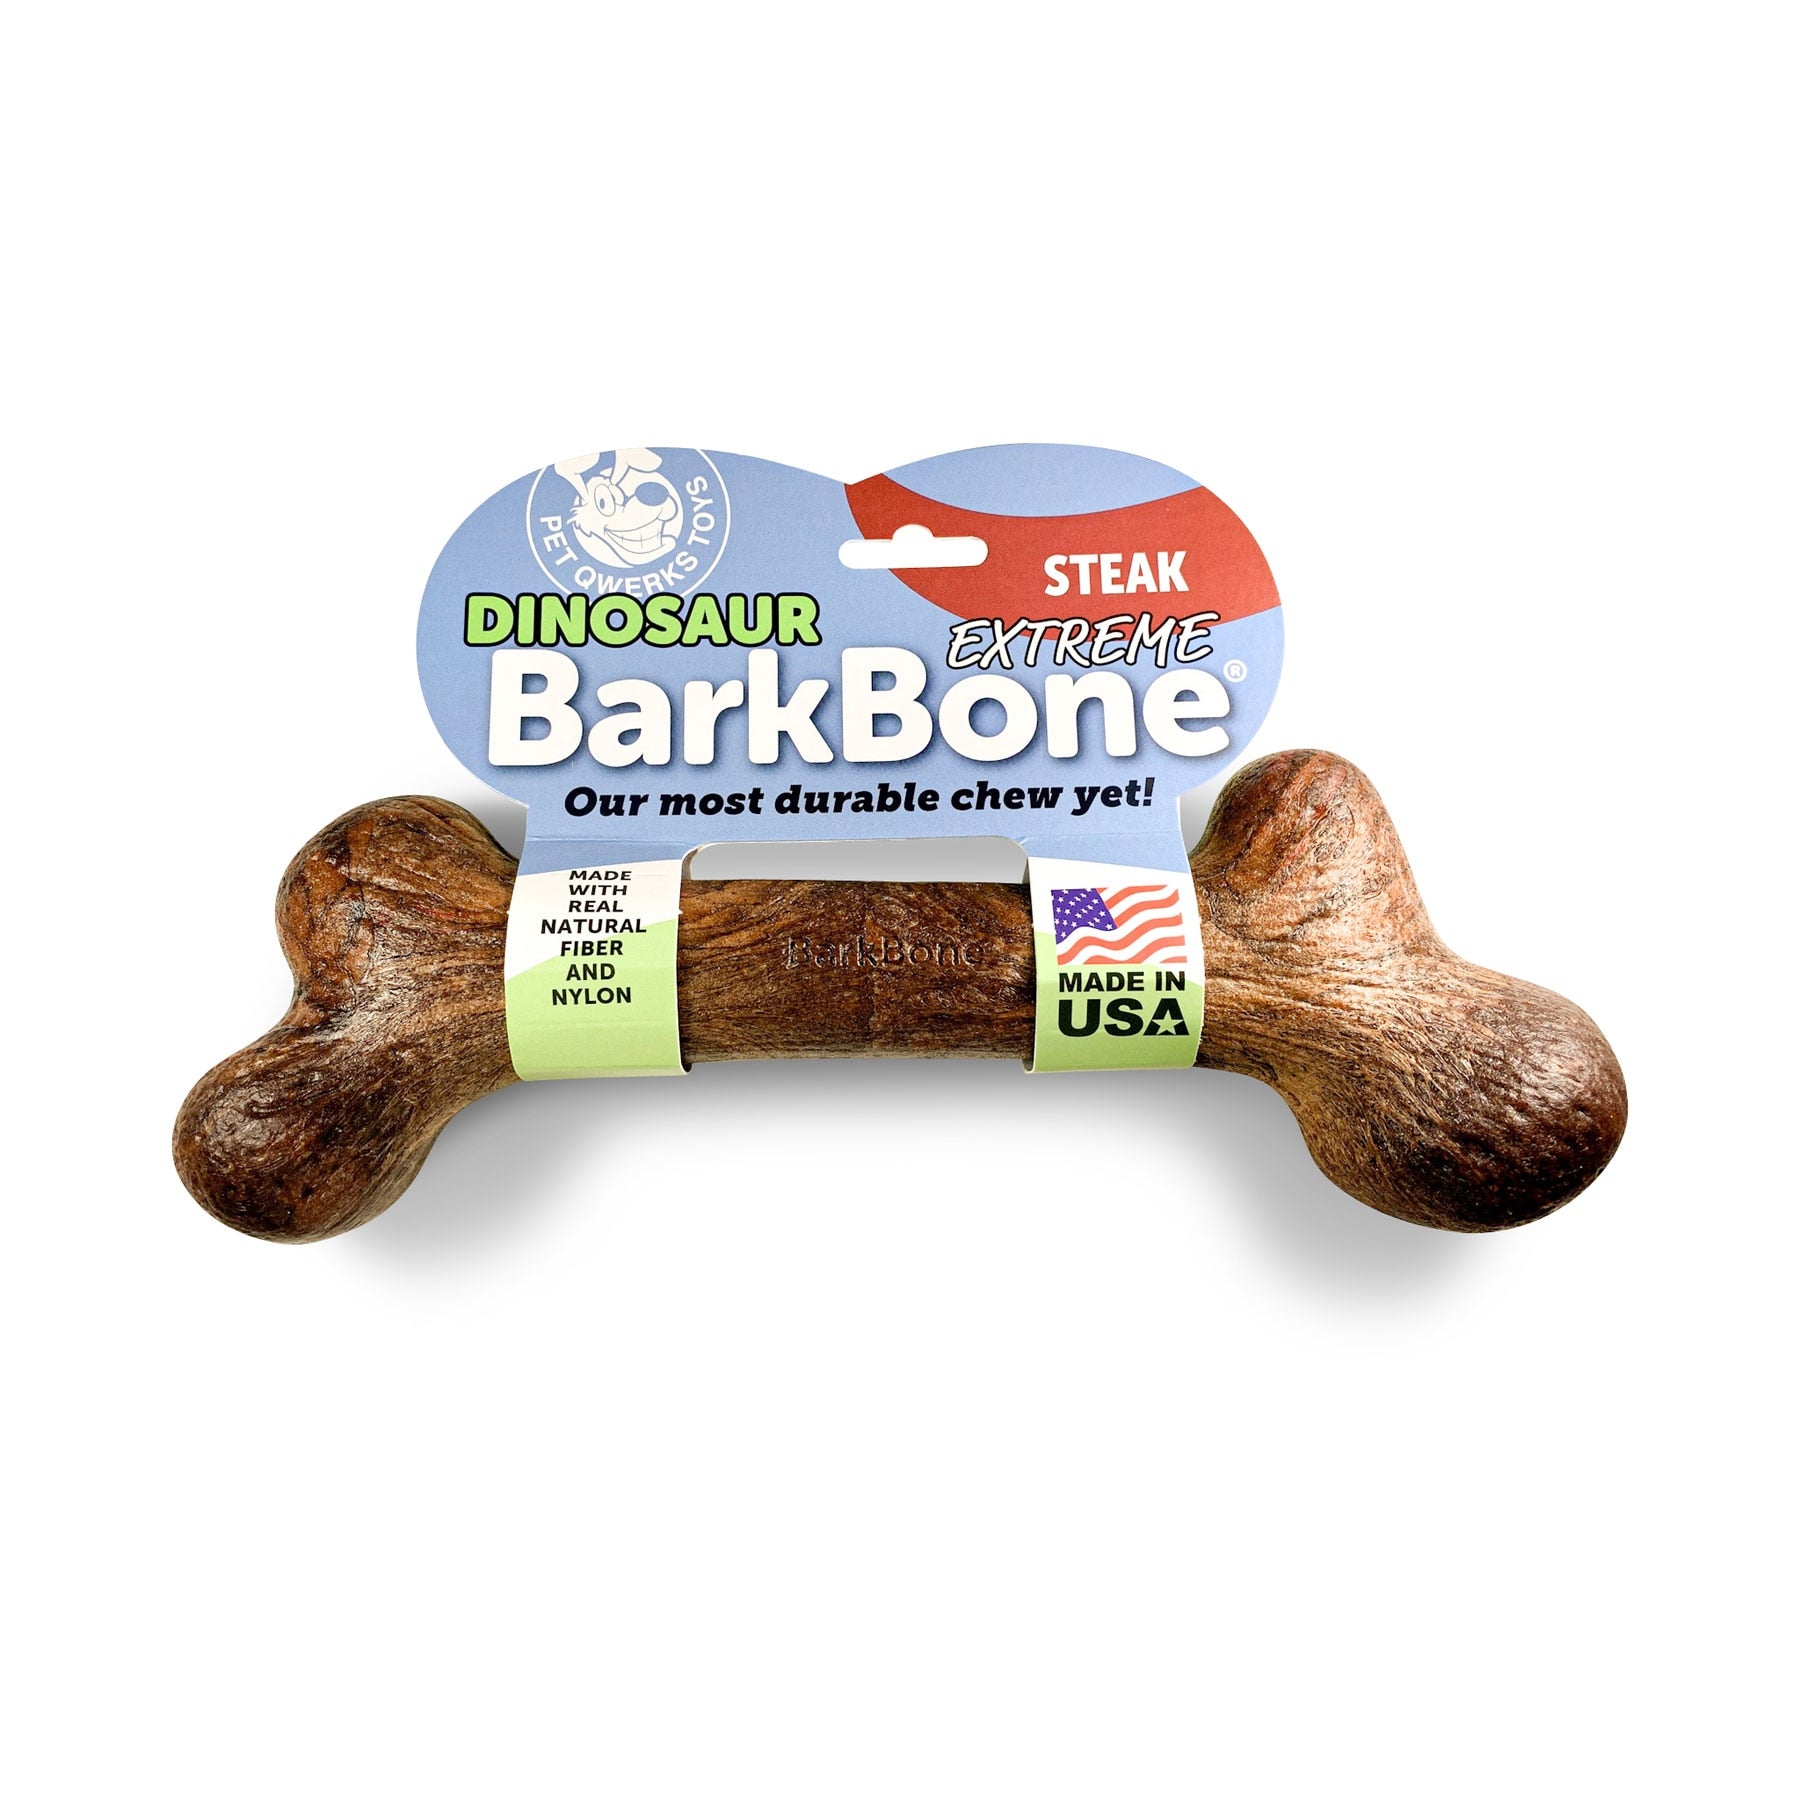 Pet Qwerks Extreme Steak Dinosaur BarkBone Nylon Dog Chew